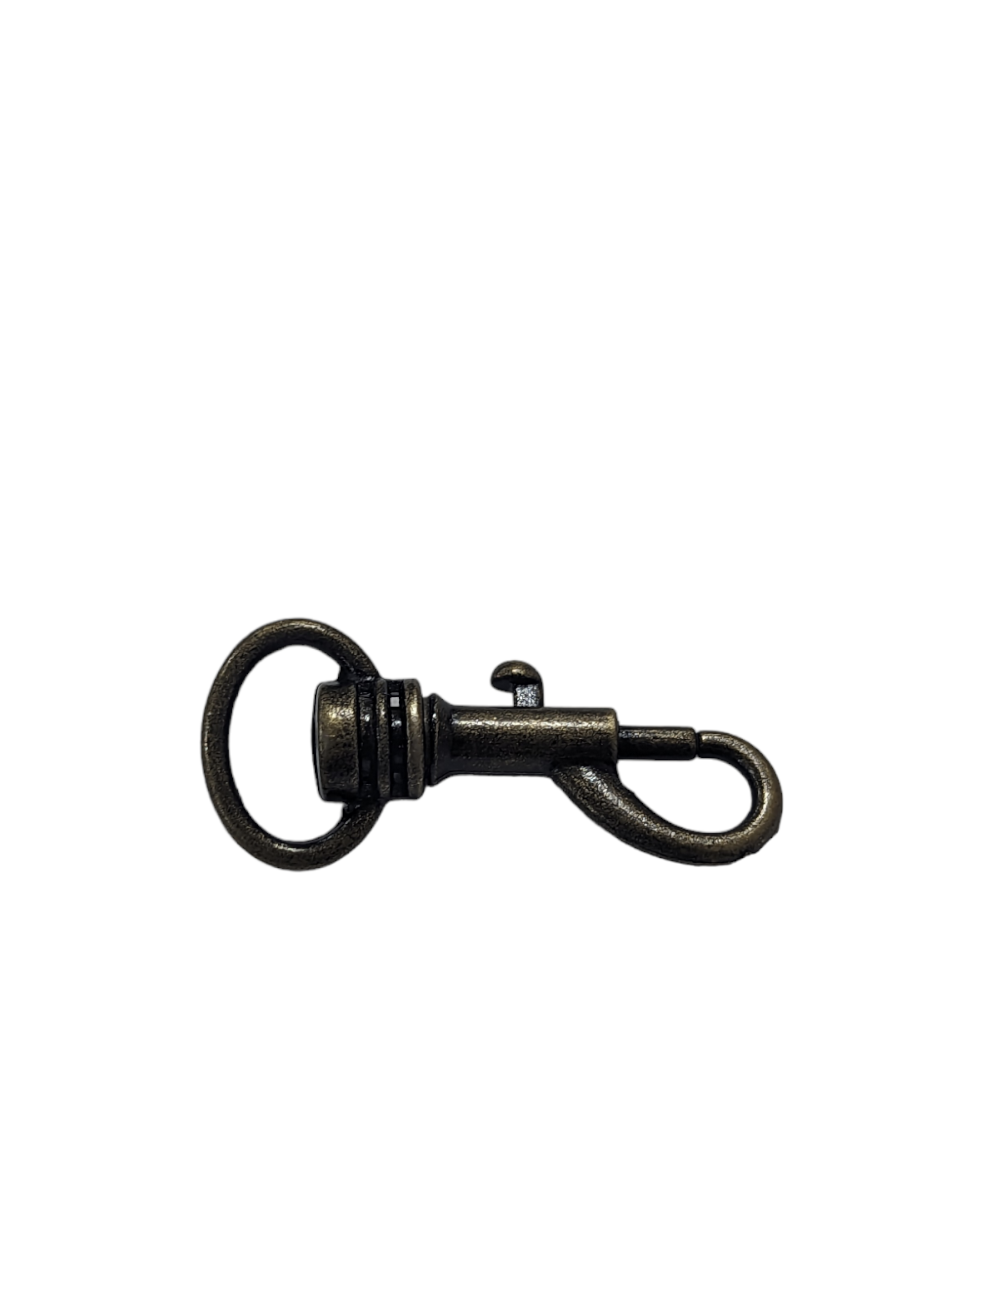 Small Key Clasp, Antique Bronze - Minerva's Bower